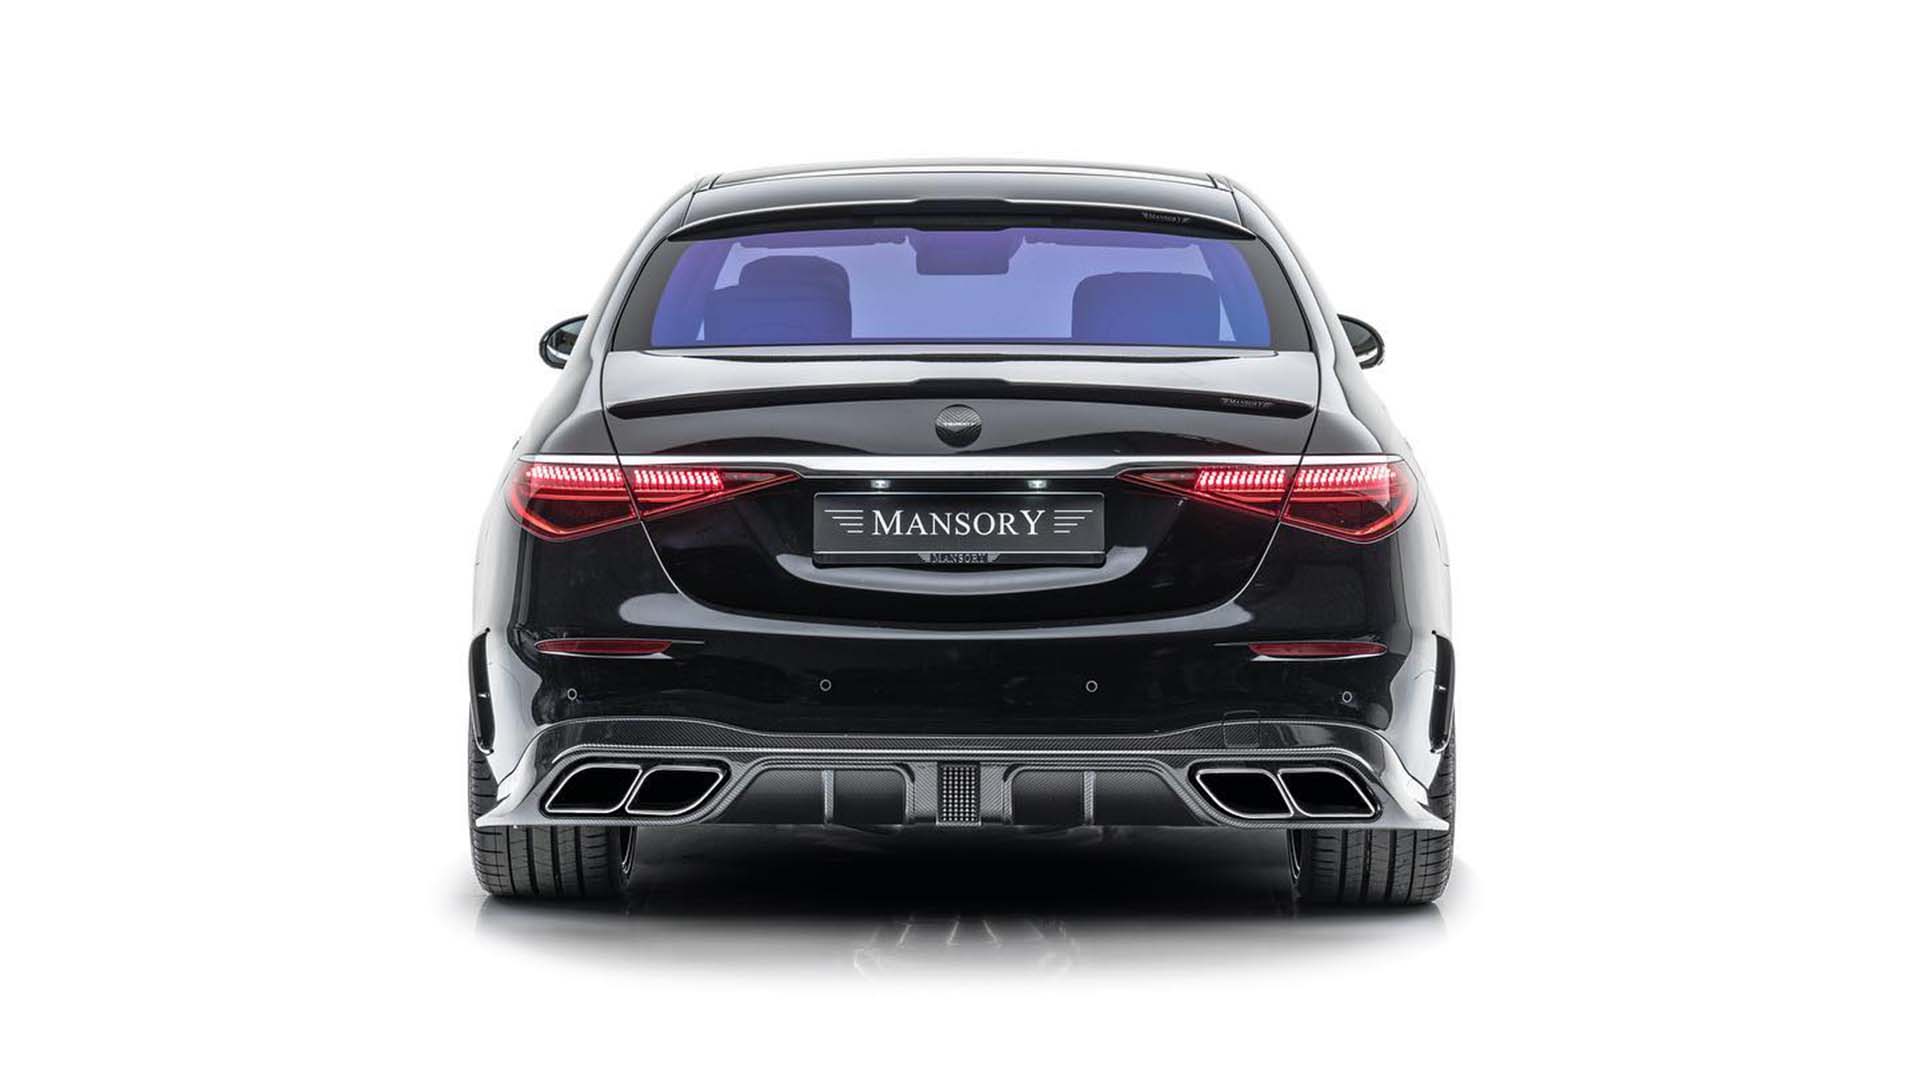 نمای عقب مرسدس بنز کلاس اس 2021 تیونینگ منصوری / Mansory 2021 Mercedes-Benz S-Class سیاه رنگ